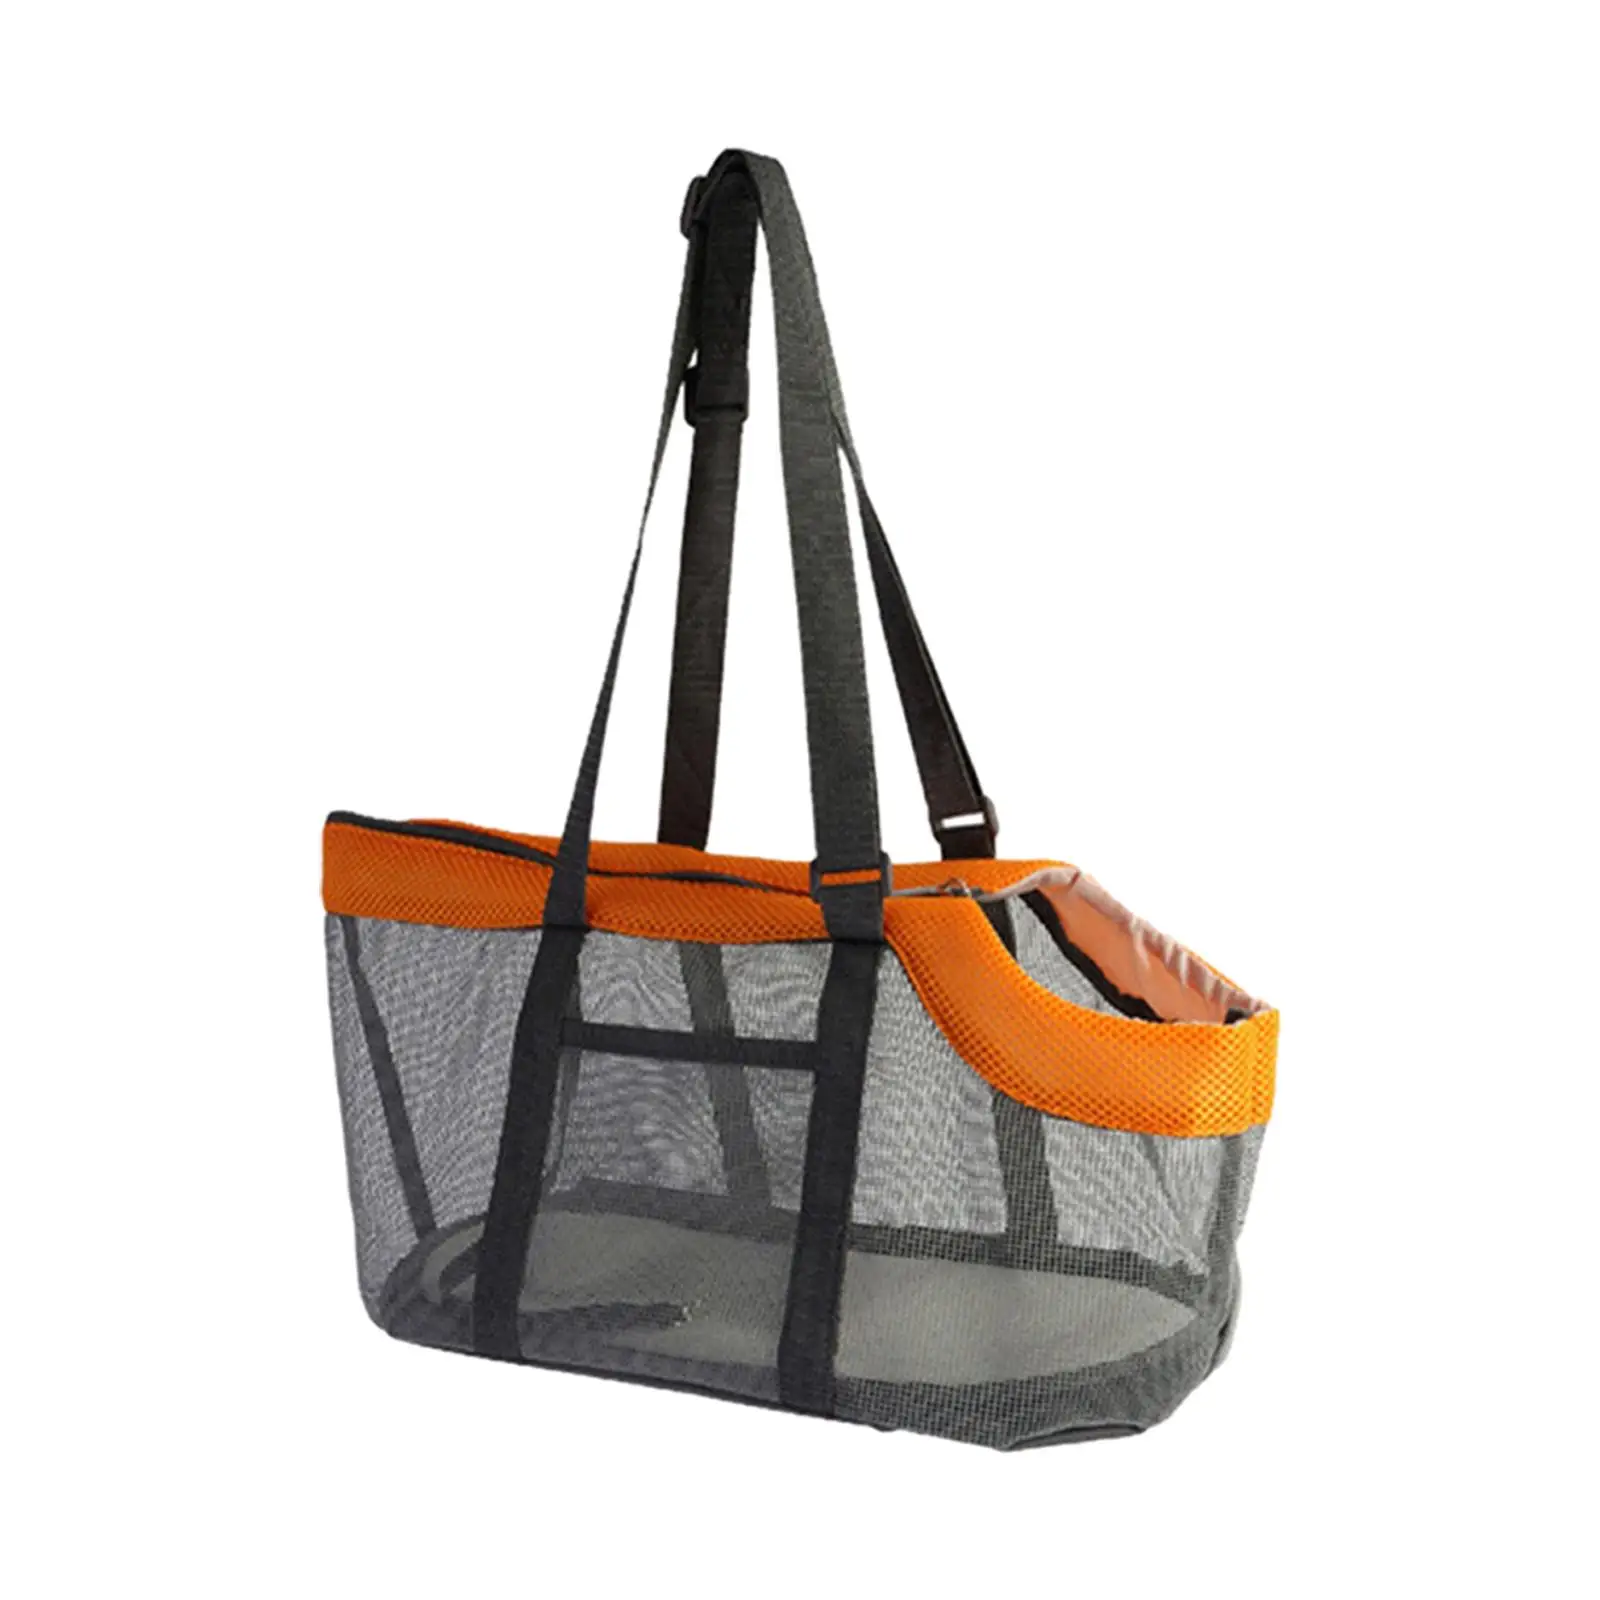 Shoulder Travel Bag with Side Pockets Portable Wear Resistant Pet Carrier Bag for Small Dogs Cat Bunny Walking Hiking Transport